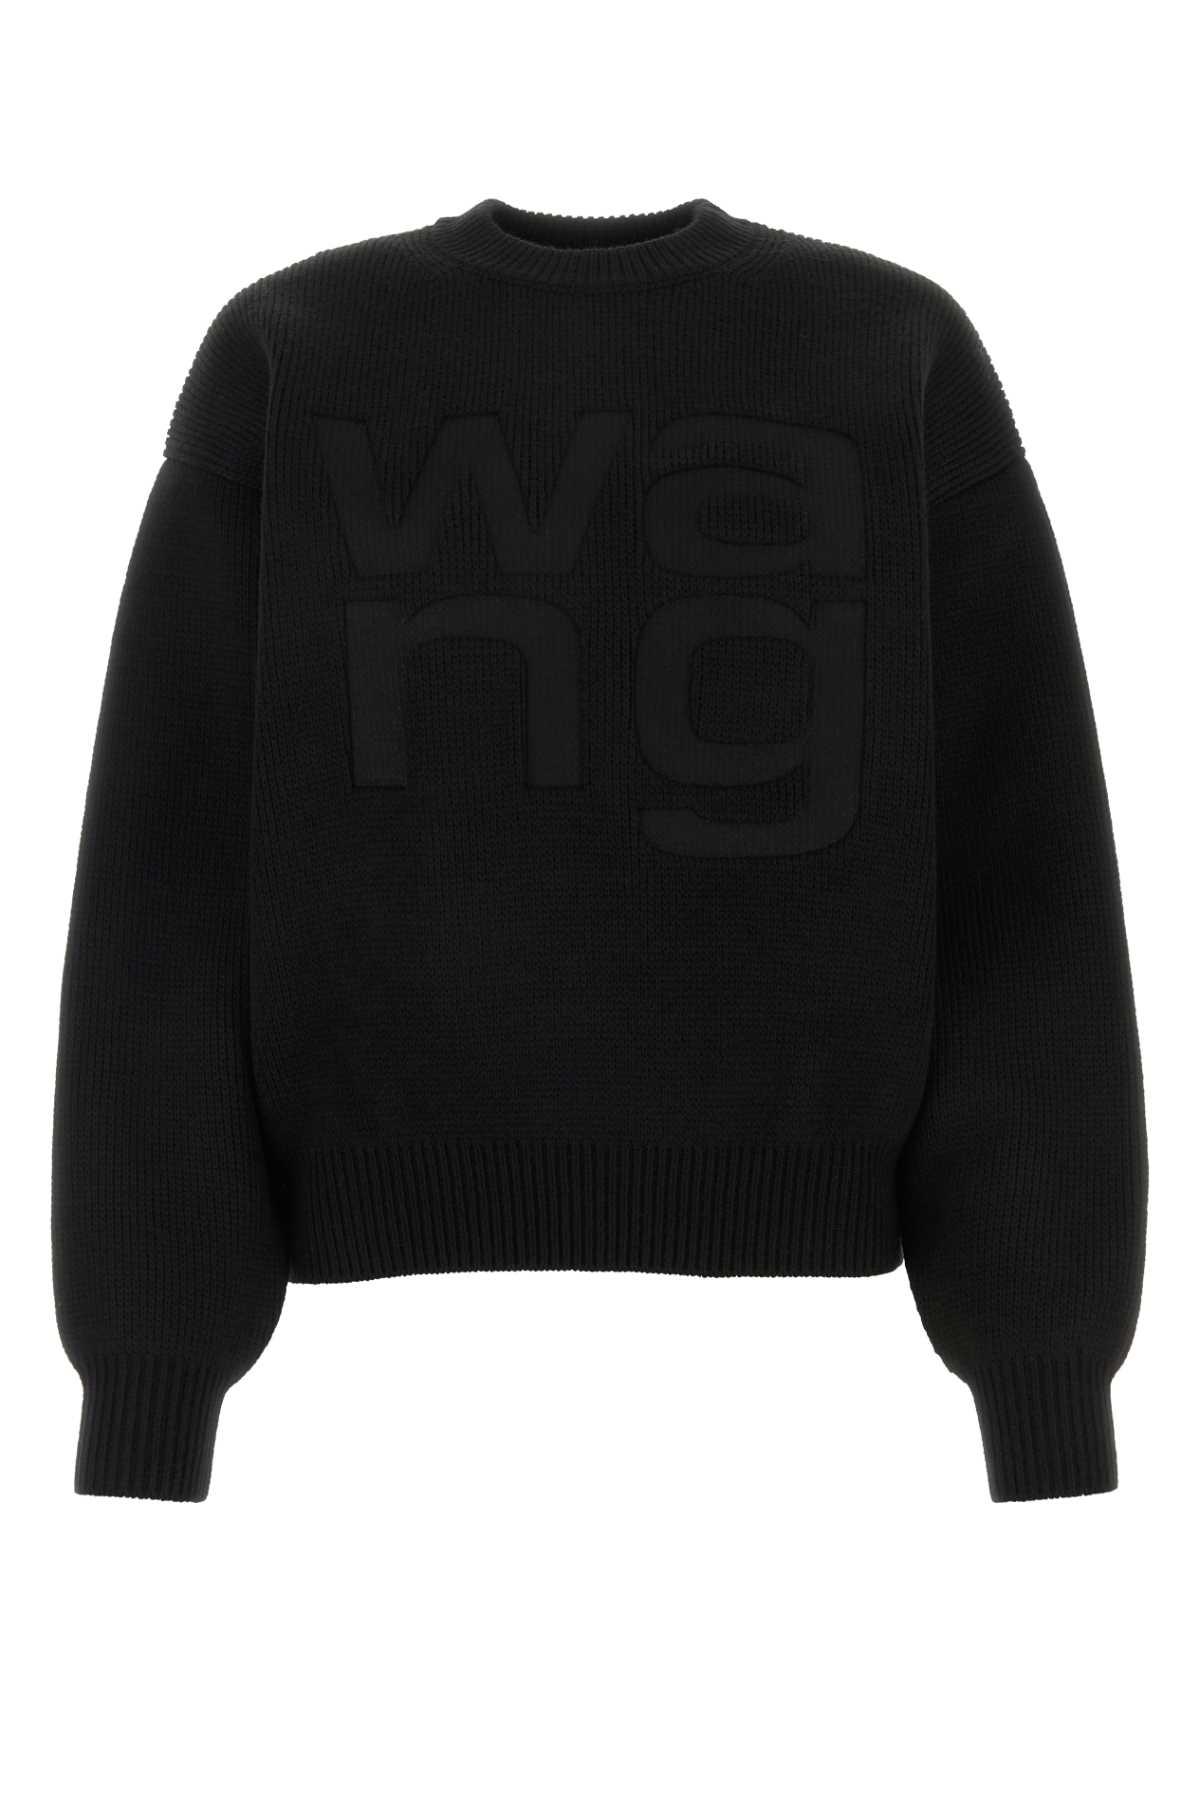 Black Acrylic Blend Sweater